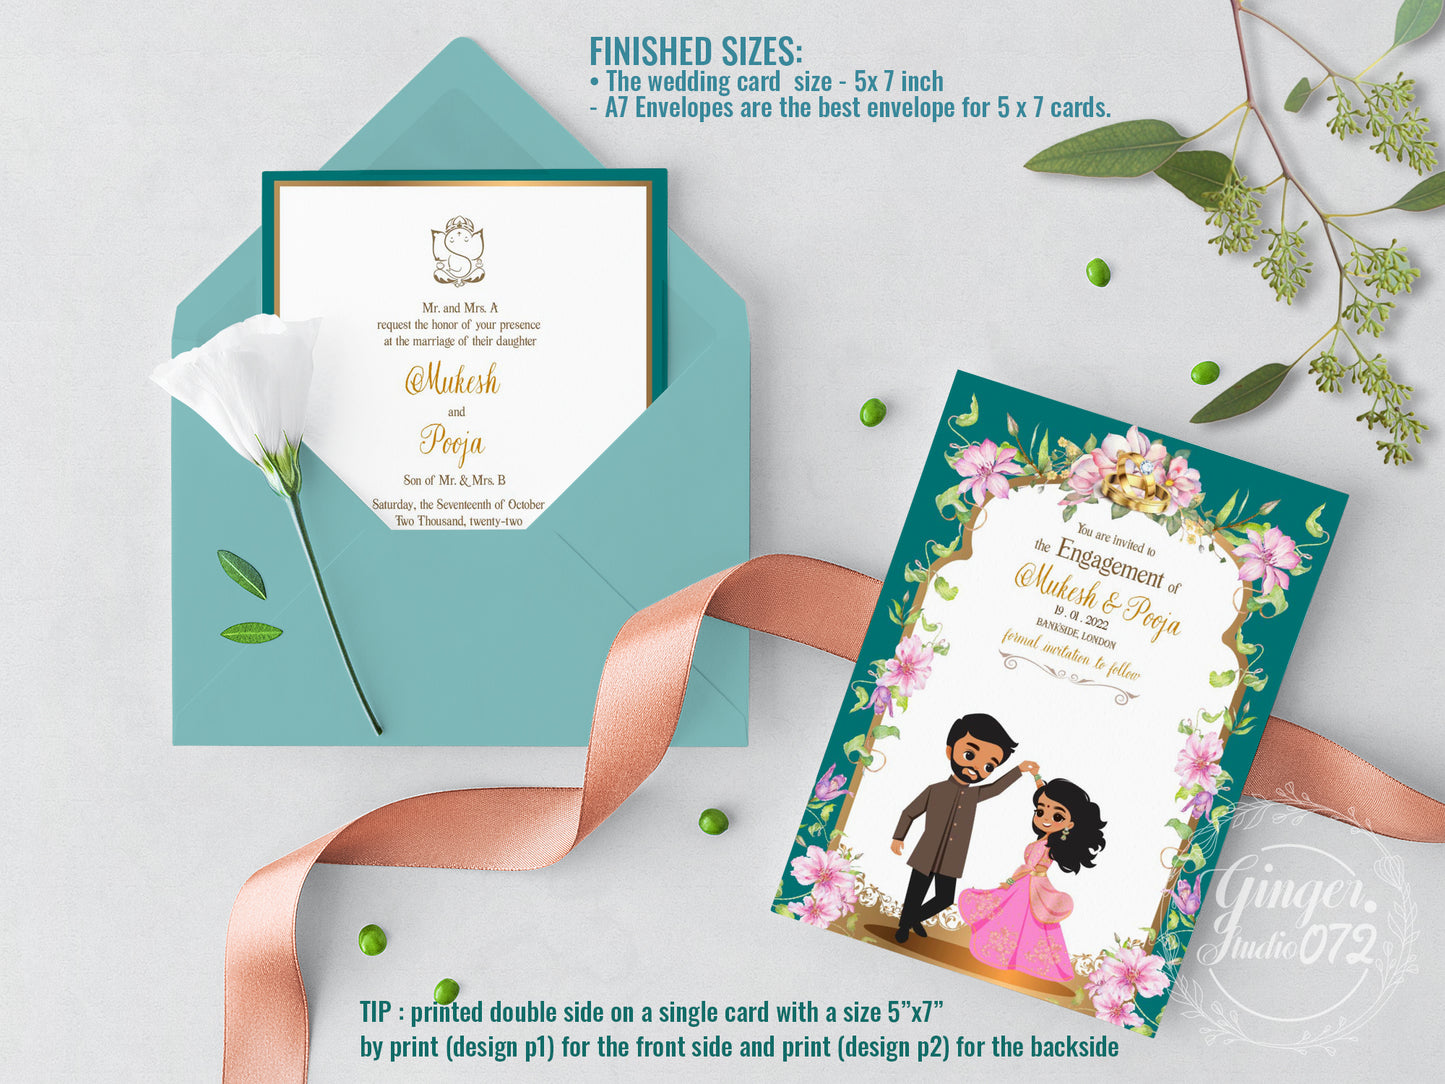 Cute Indian/Hindu wedding invite, Haldi/Mehndi/Sangeet, Customize template #idwc220918